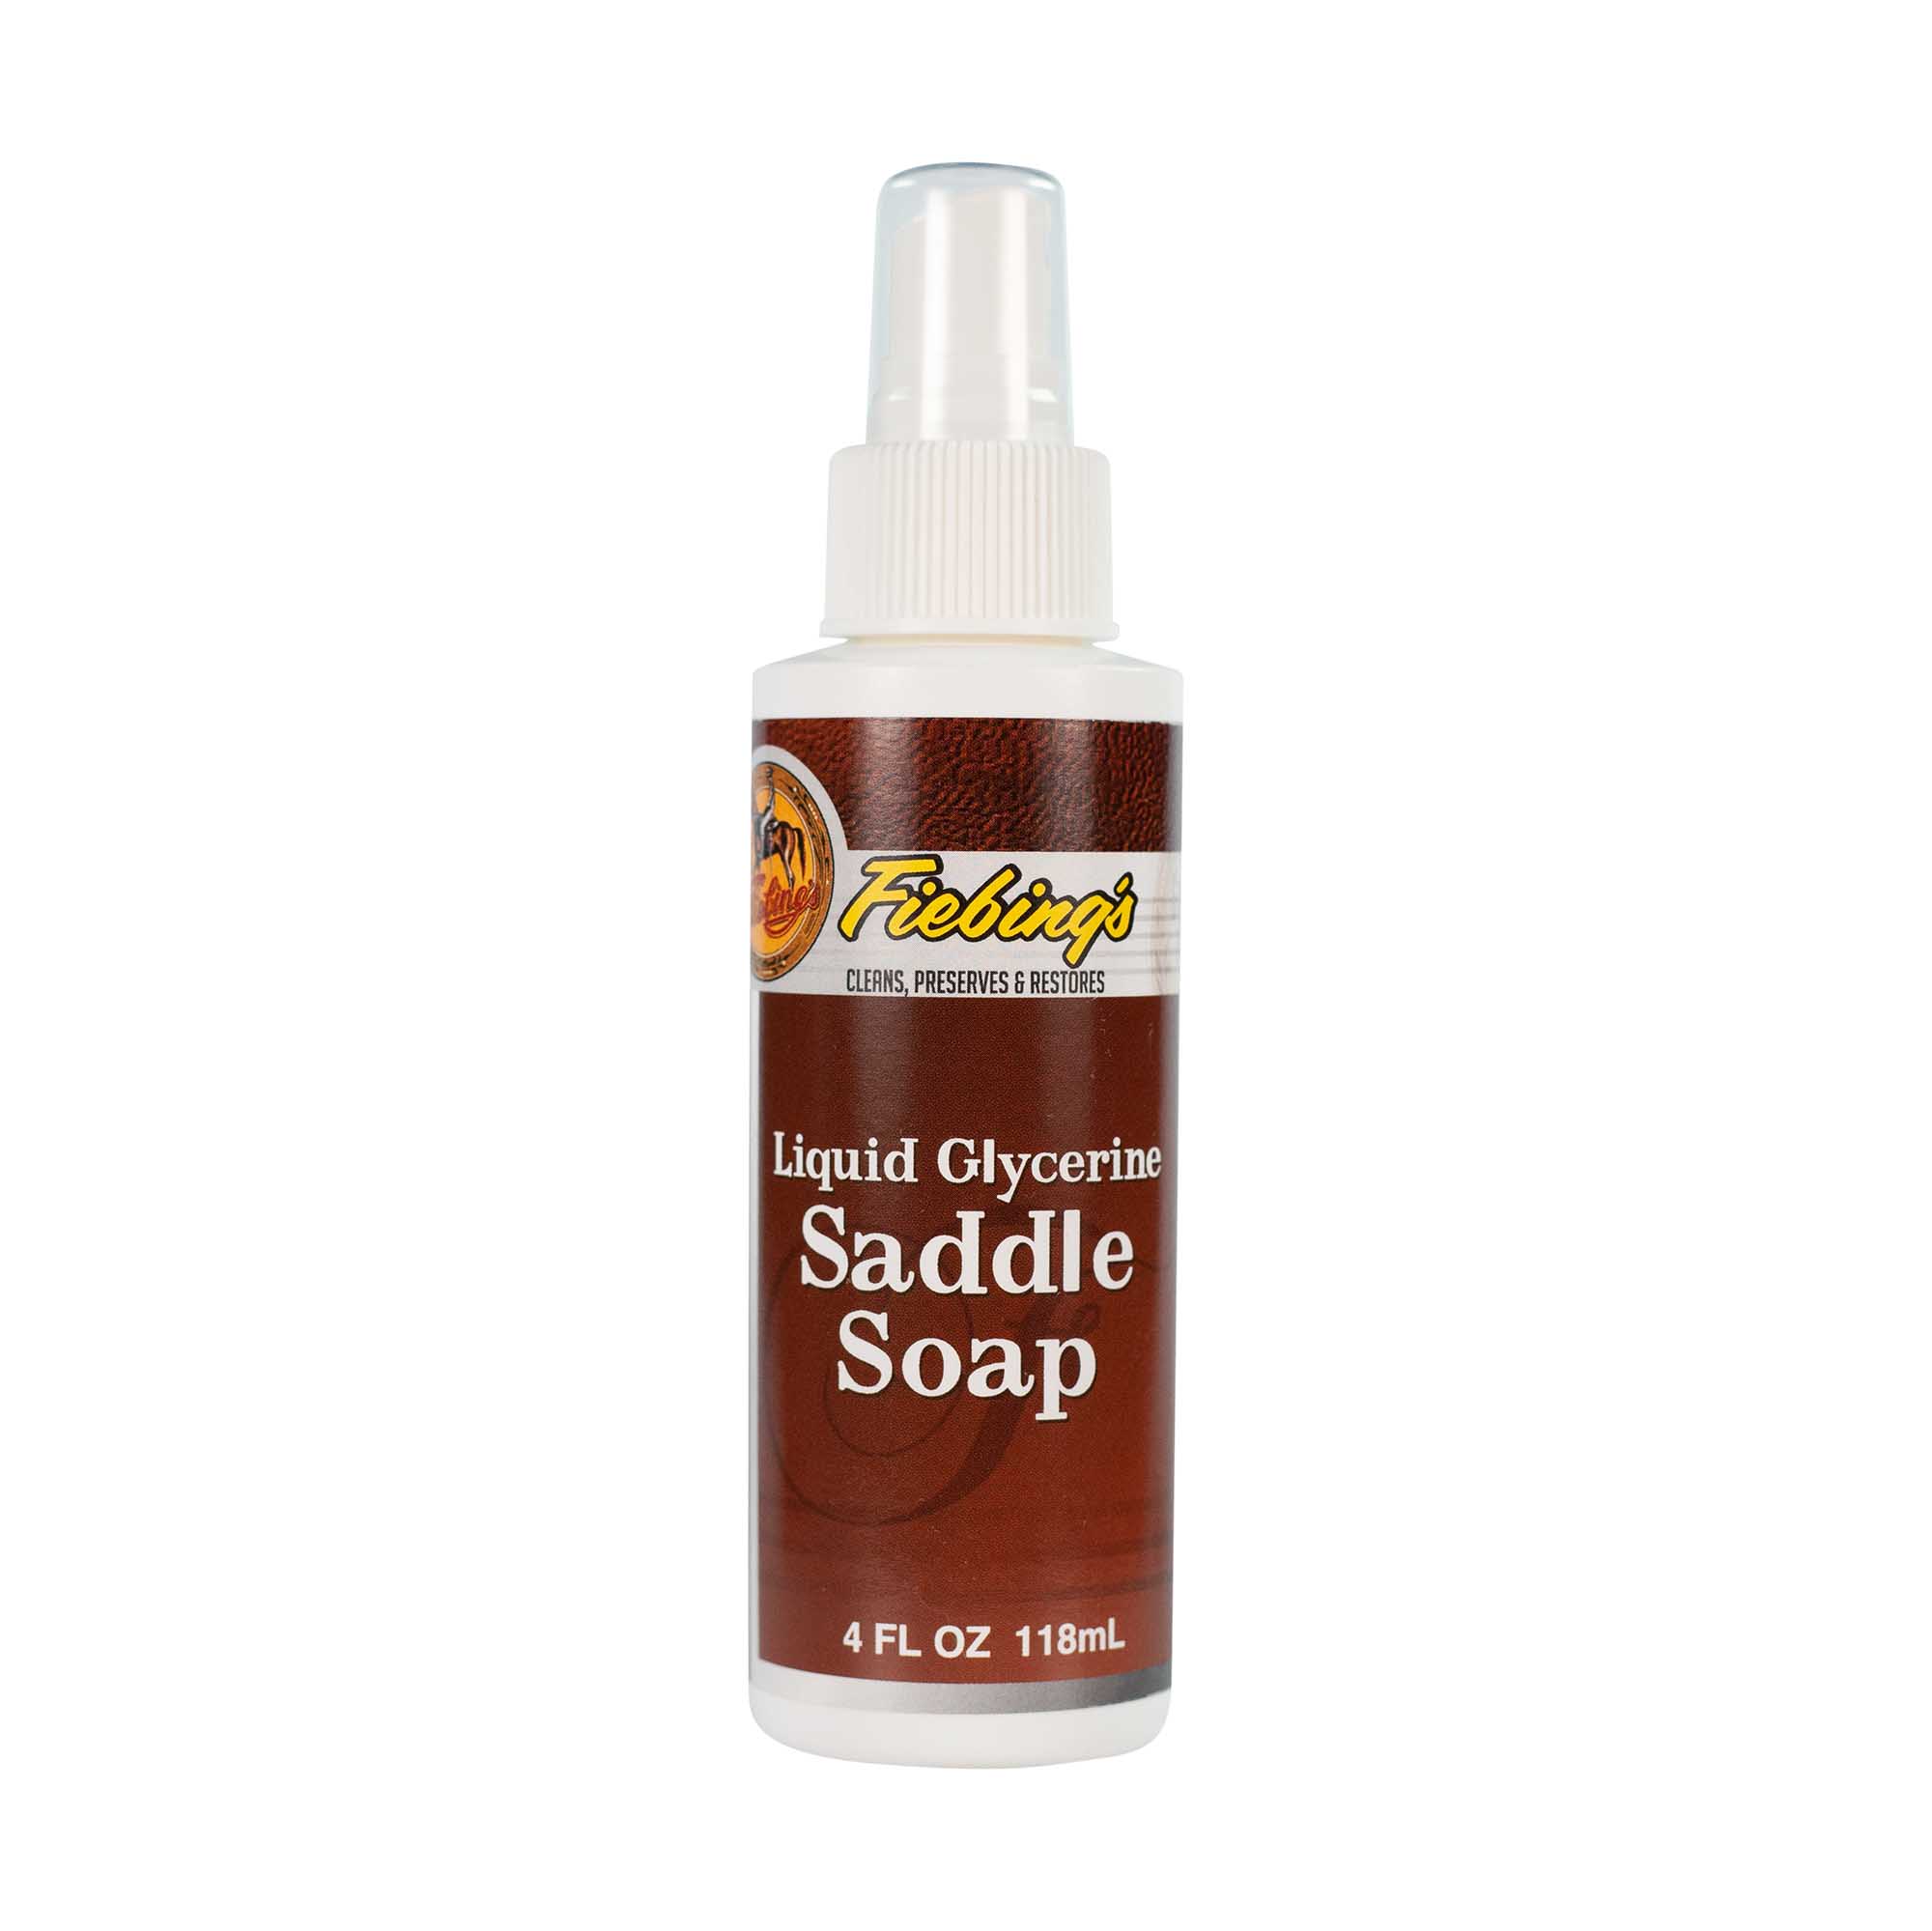 Fiebing's Liquid Glycerine Saddle Soap - Saltillo, MS - Scruggs